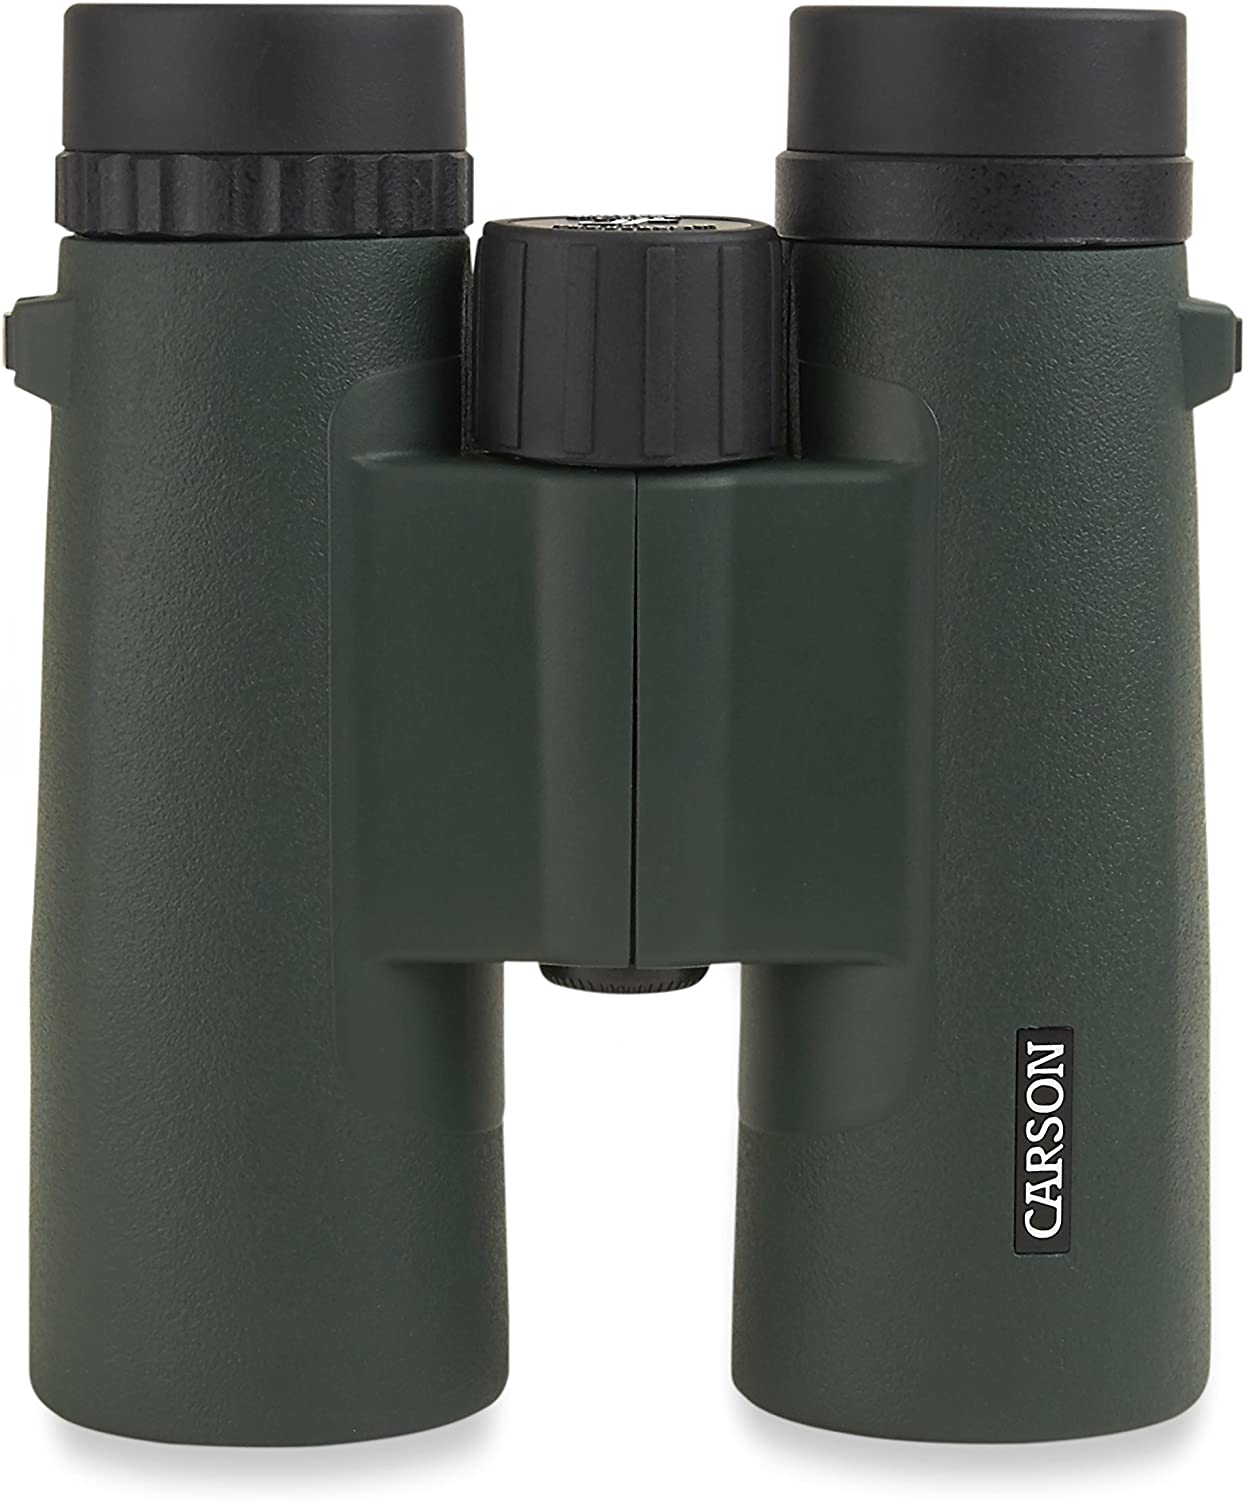 Carson JR Series Full-Sized Waterproof Binoculars